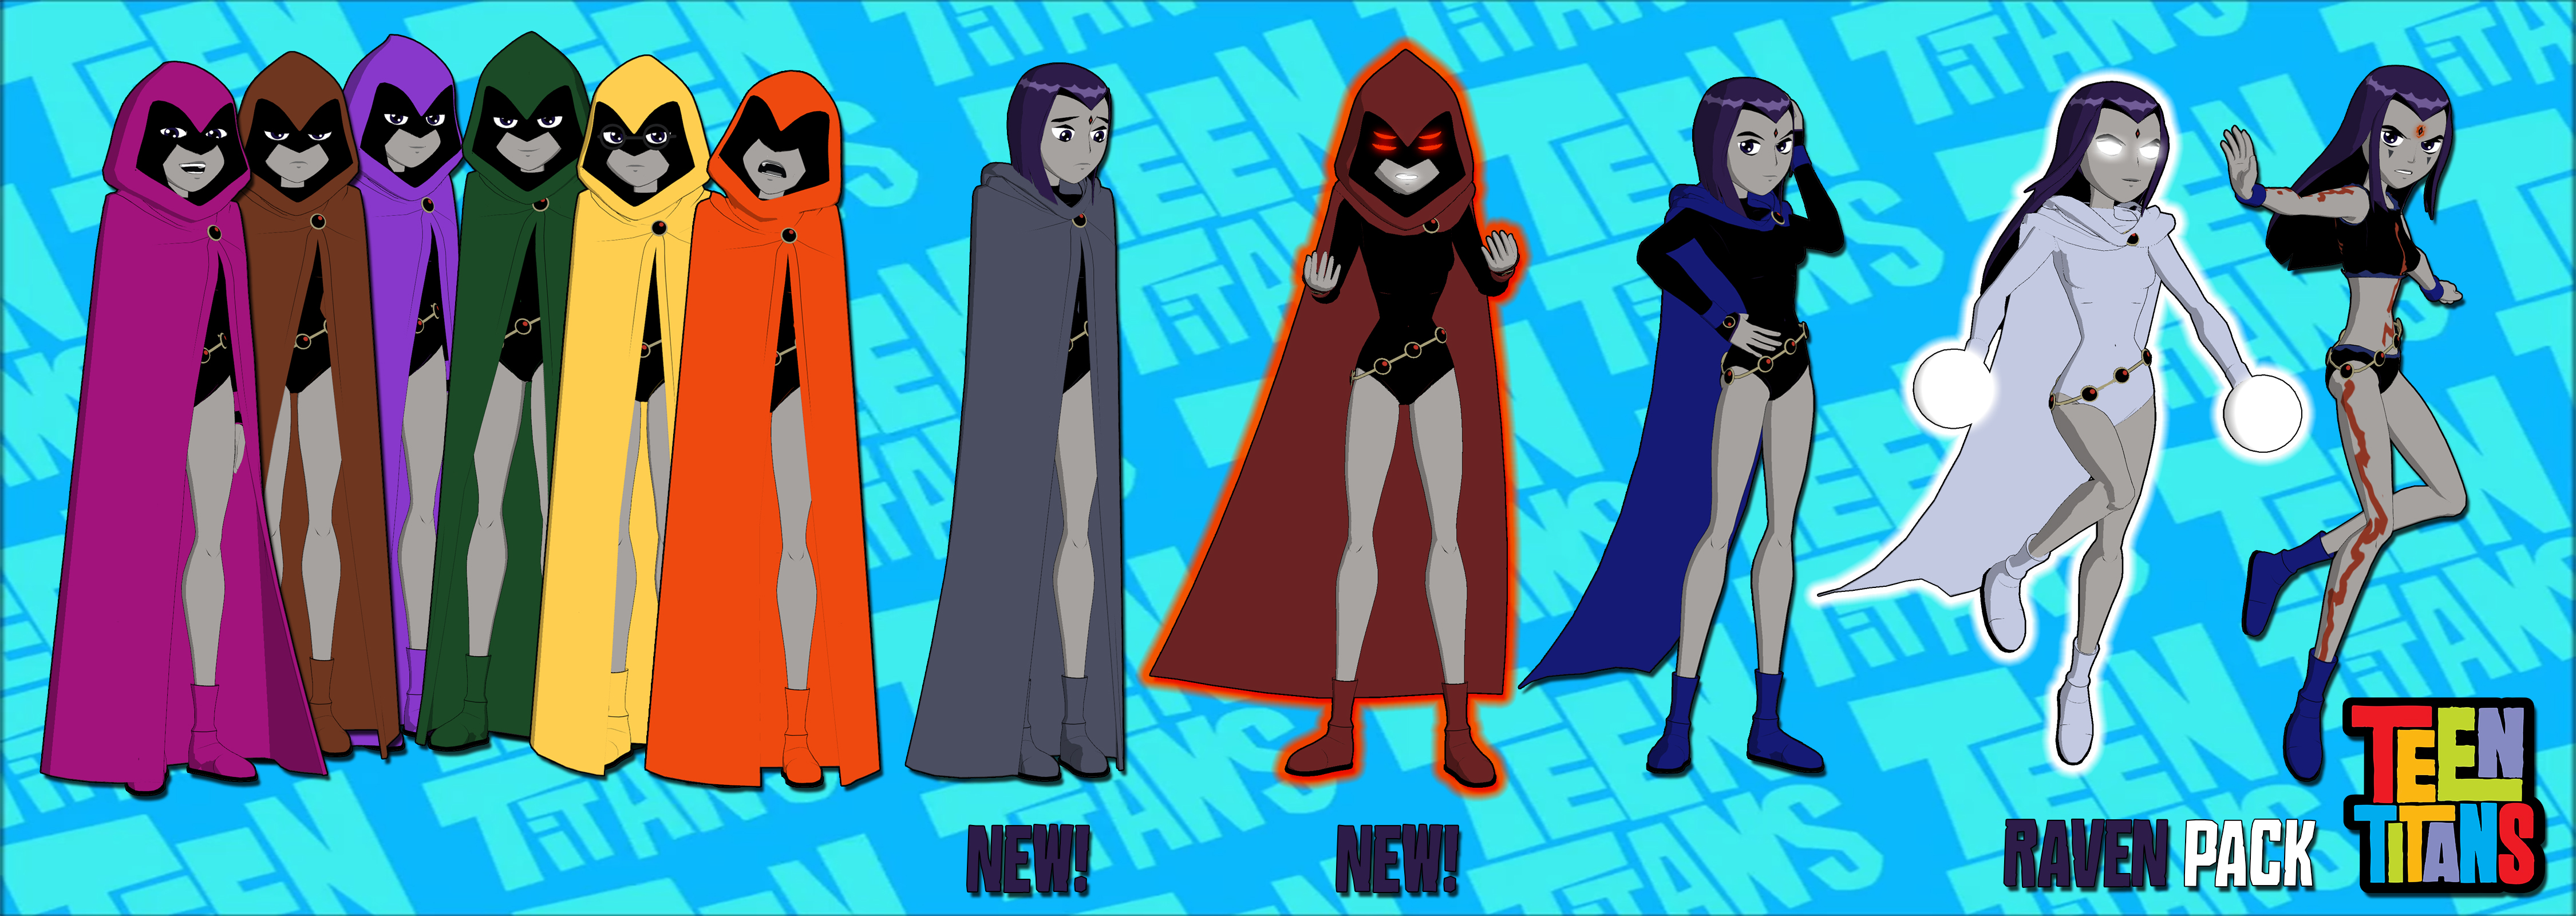 Teen Titans 3D Raven by Bandidude on DeviantArt